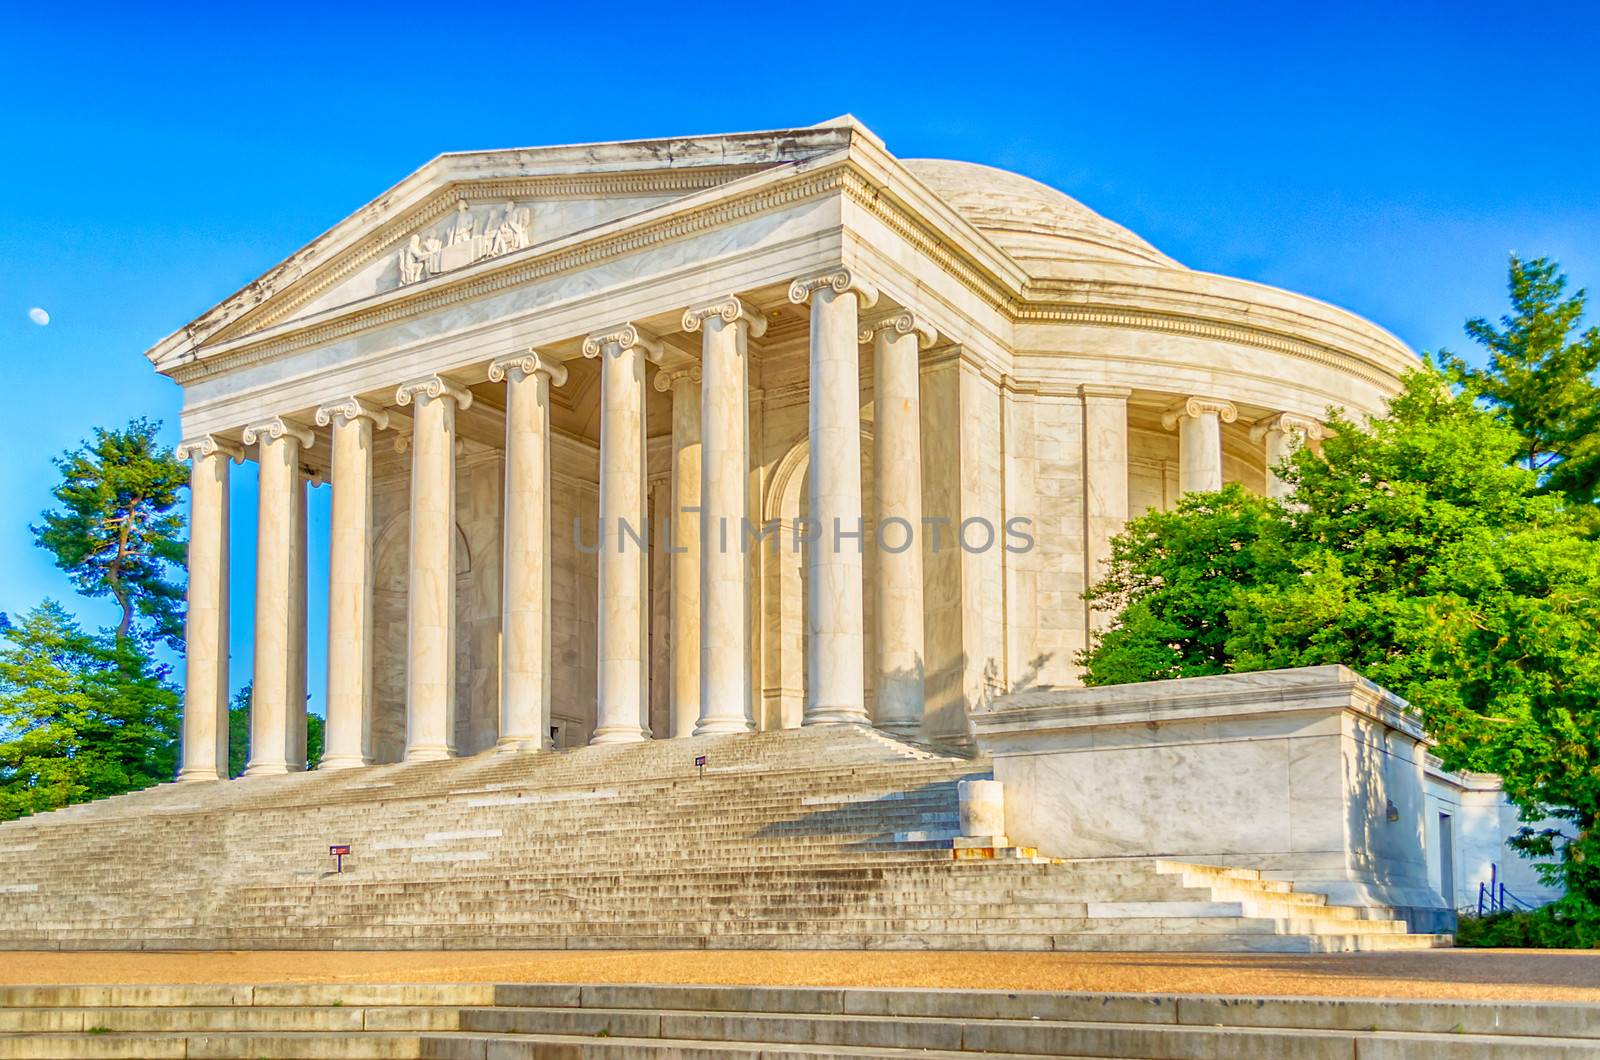 Jefferson Memorial in Washington DC by marcorubino